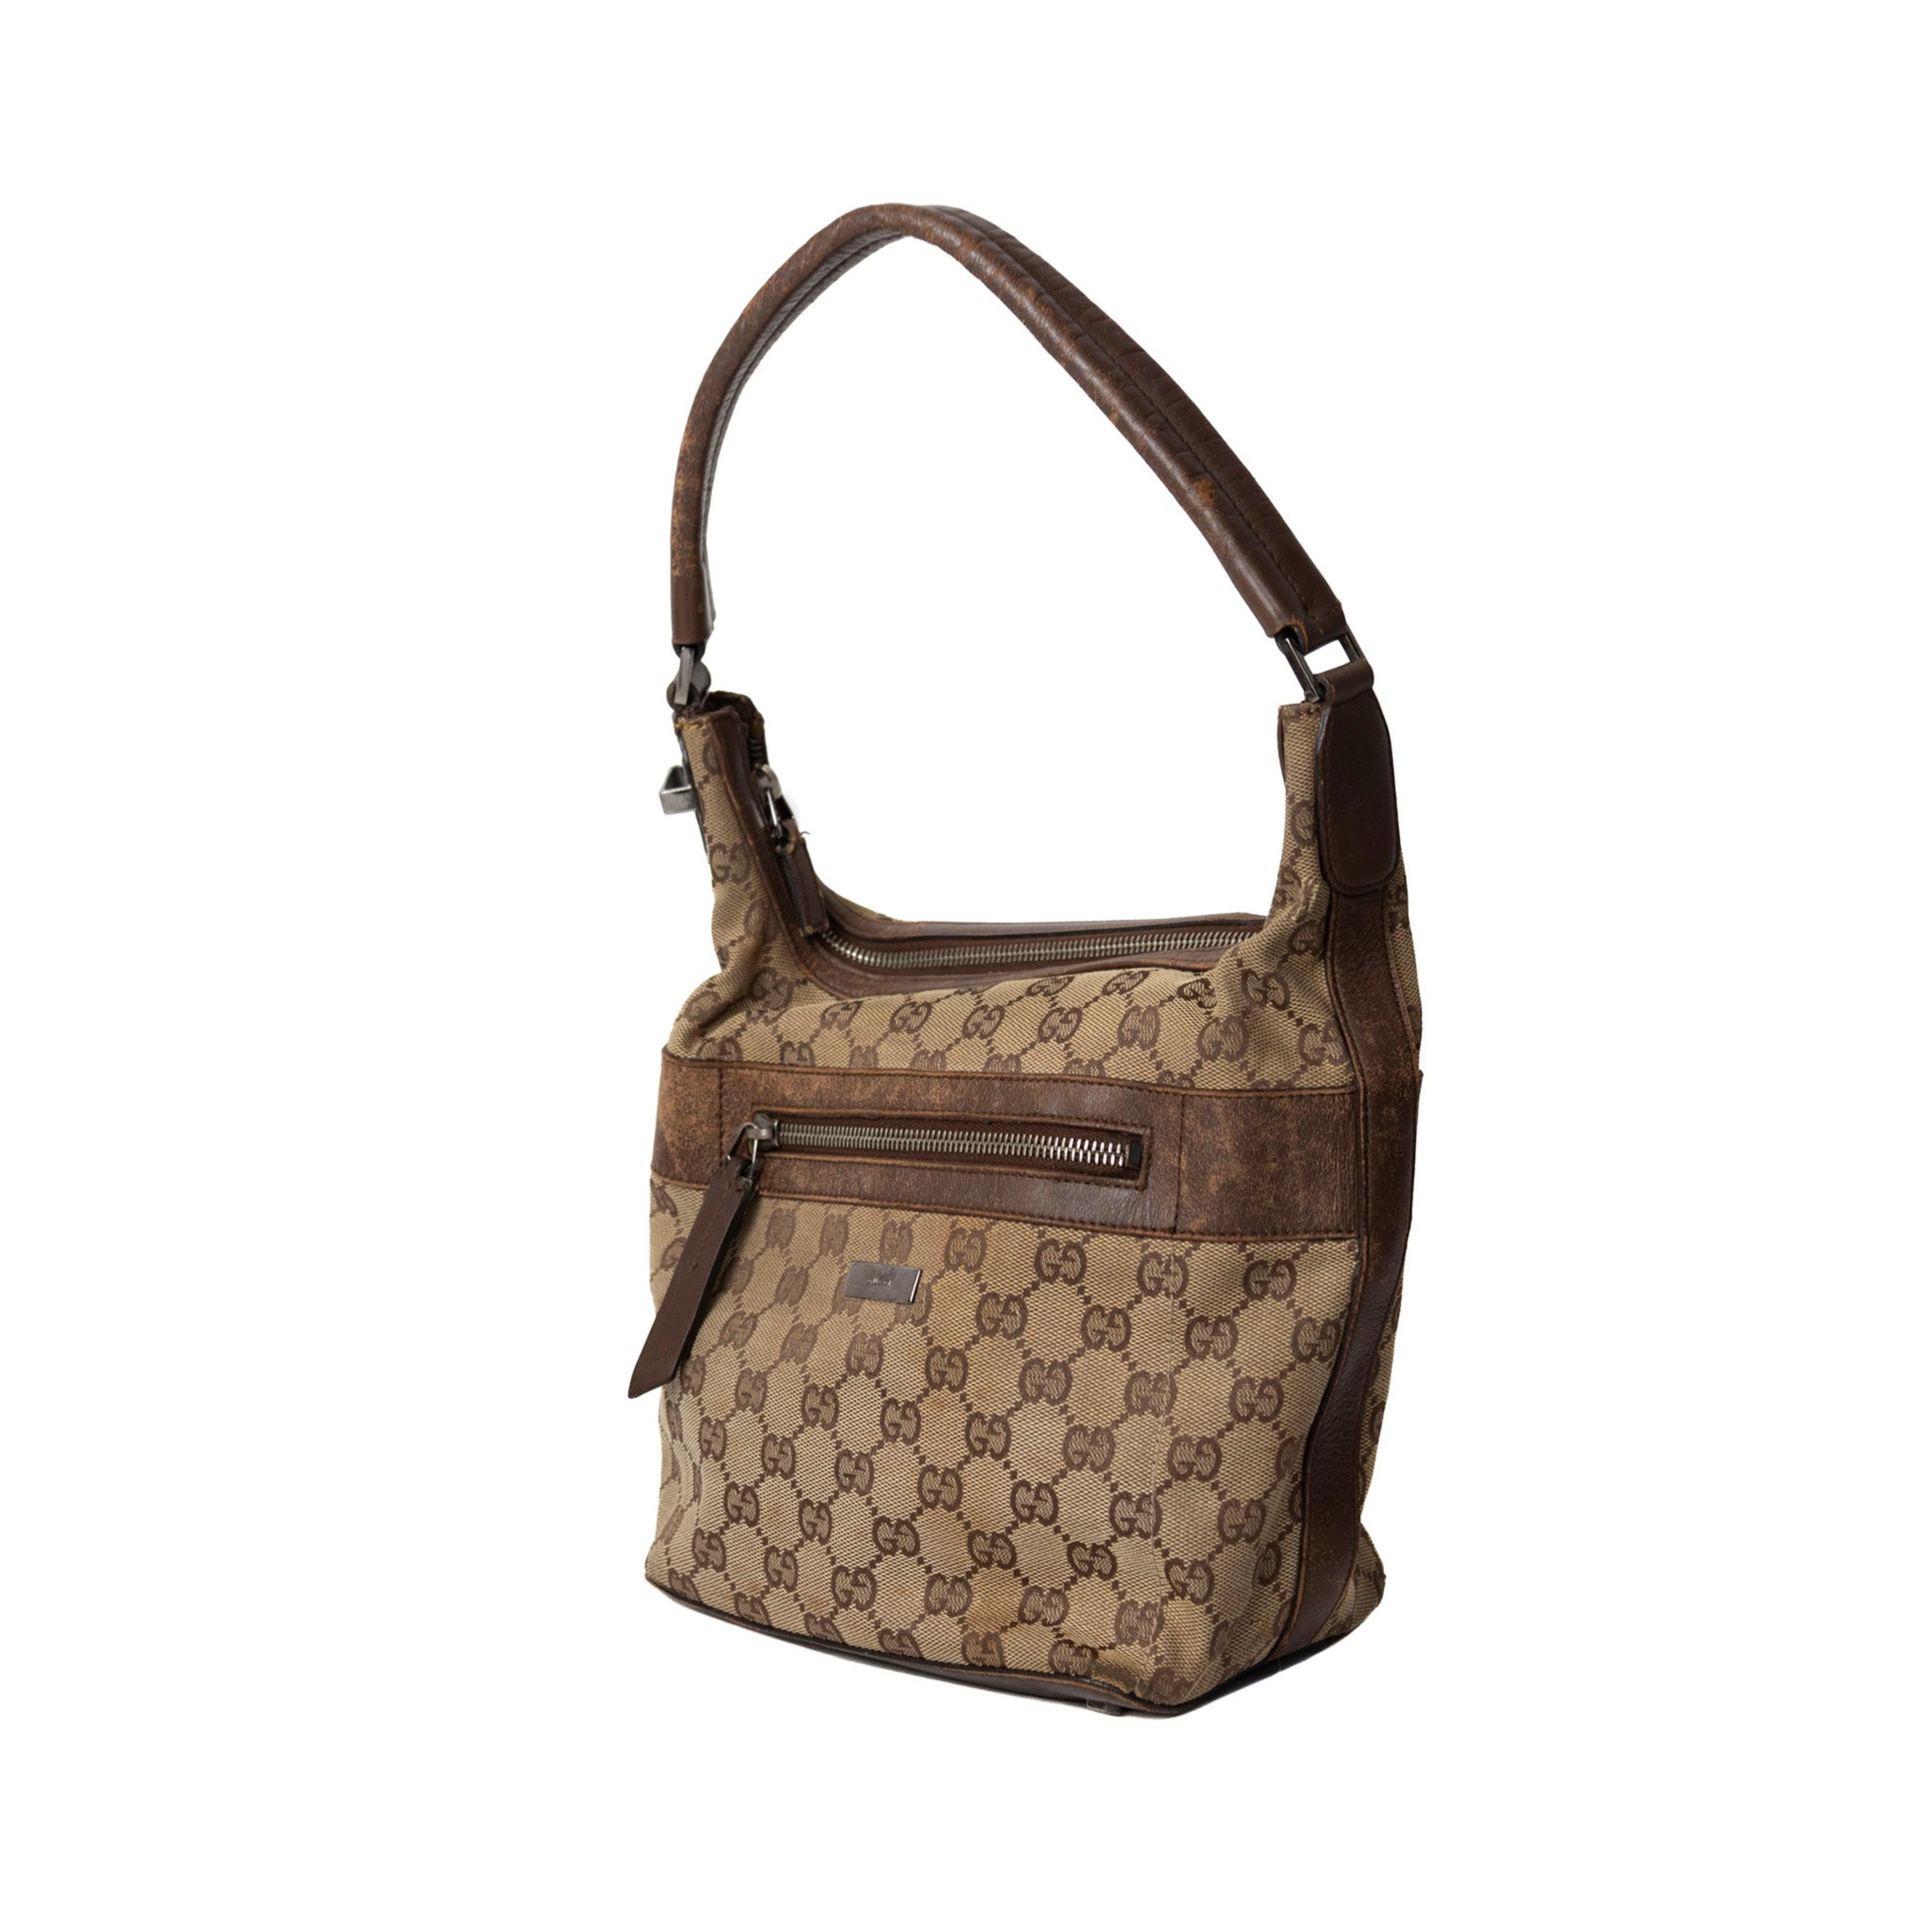 Alternate View 2 of Gucci Monogram GG Pochette Shoulder Bag